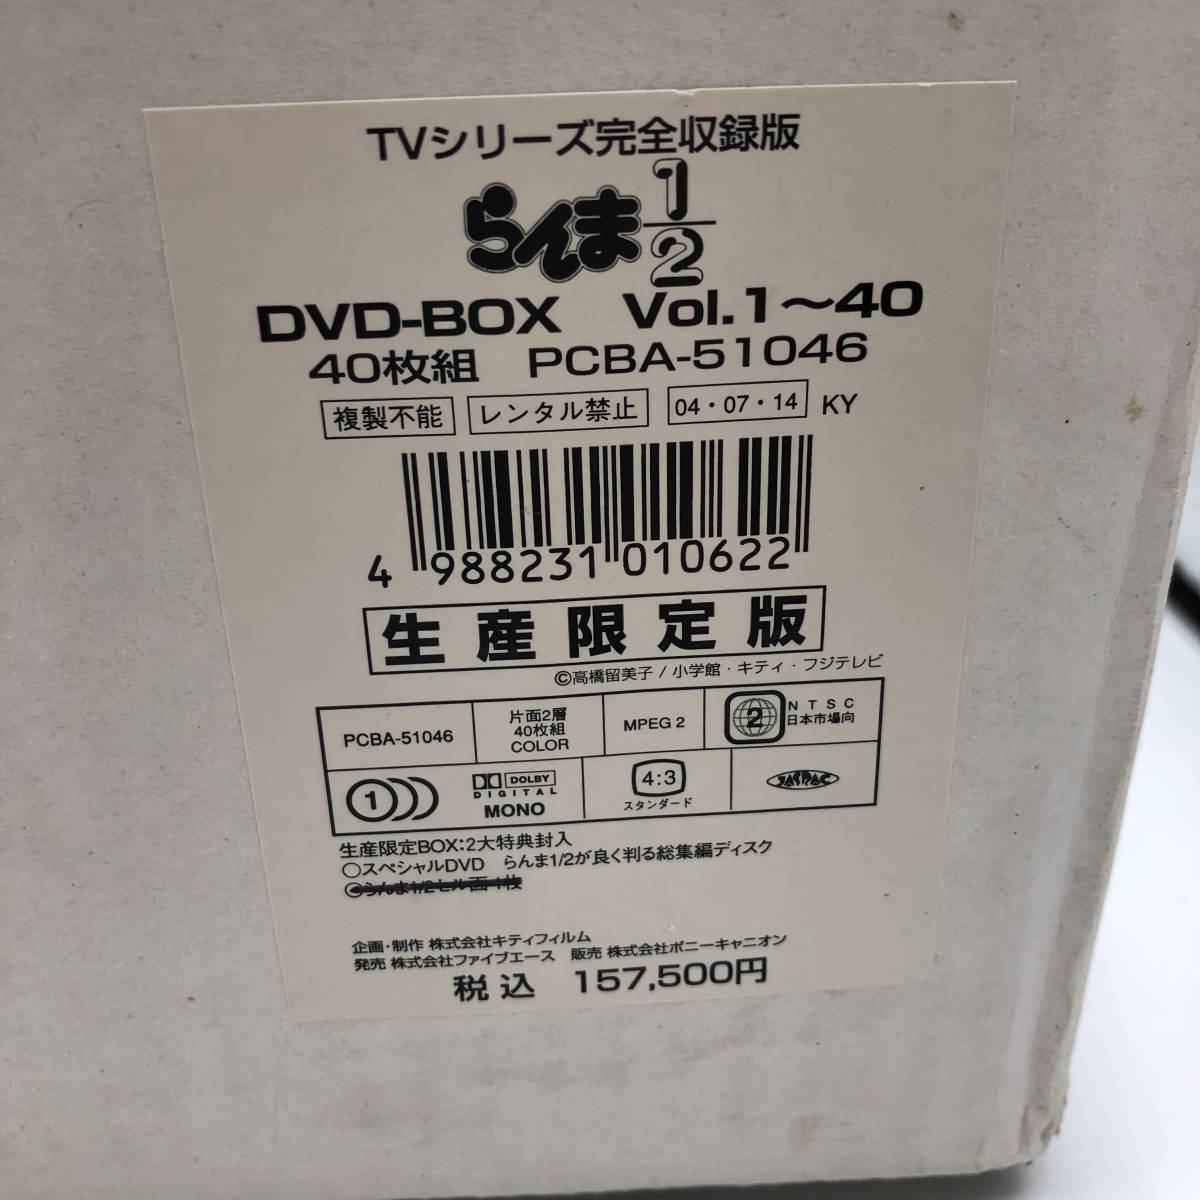 Yahoo!オークション - らんま1/2 TVシリーズ 完全収録版 DVD-BOX 初